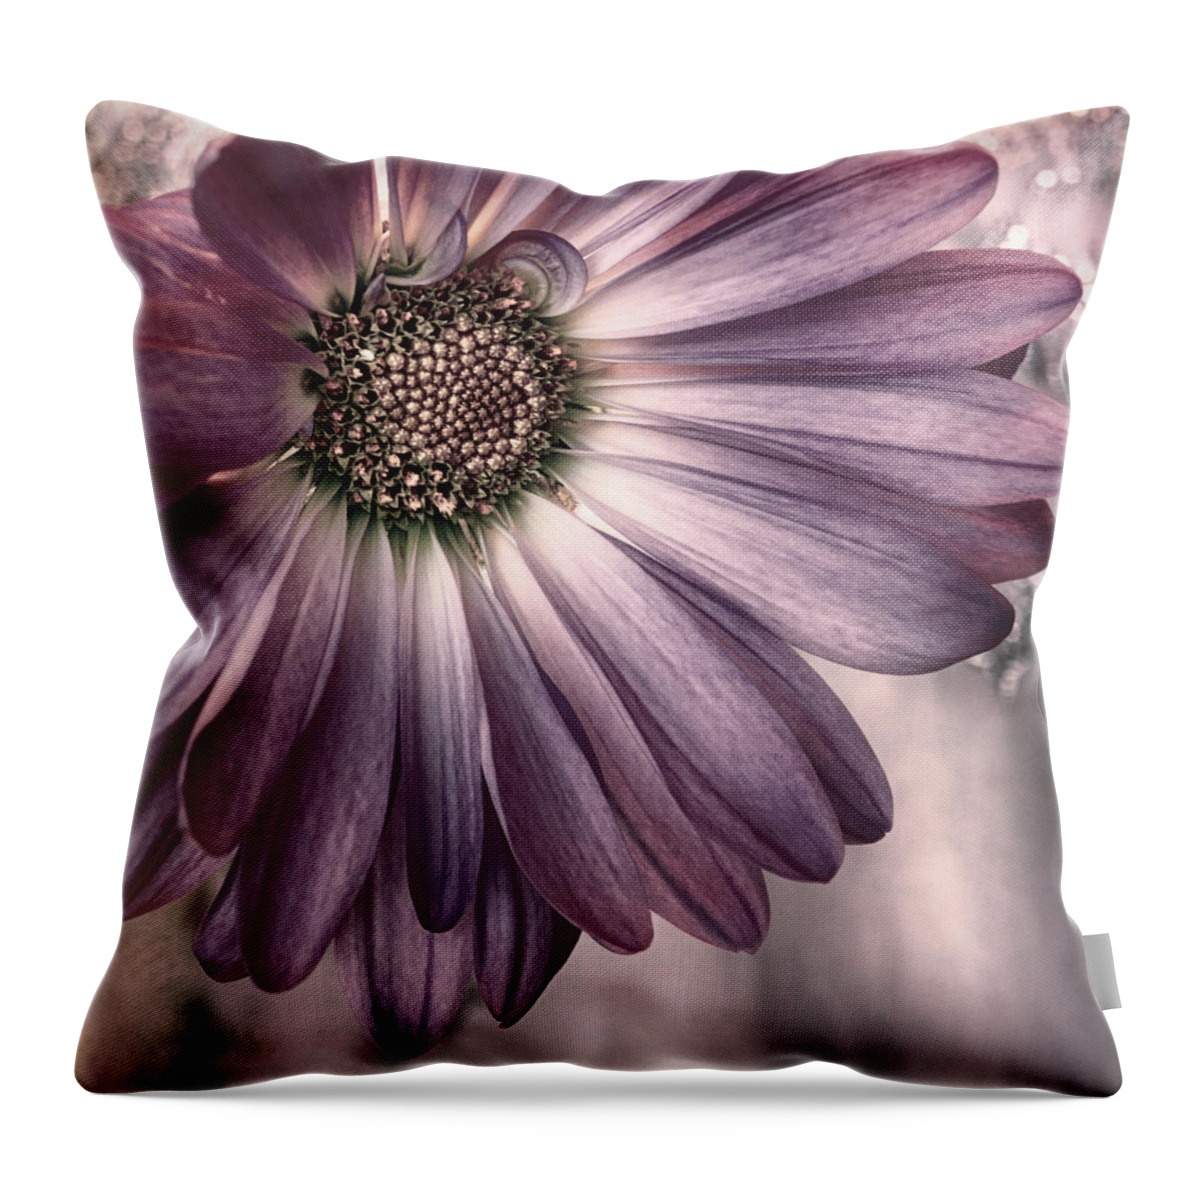 Floral Throw Pillow featuring the photograph Cabernet Sauvignon by Darlene Kwiatkowski